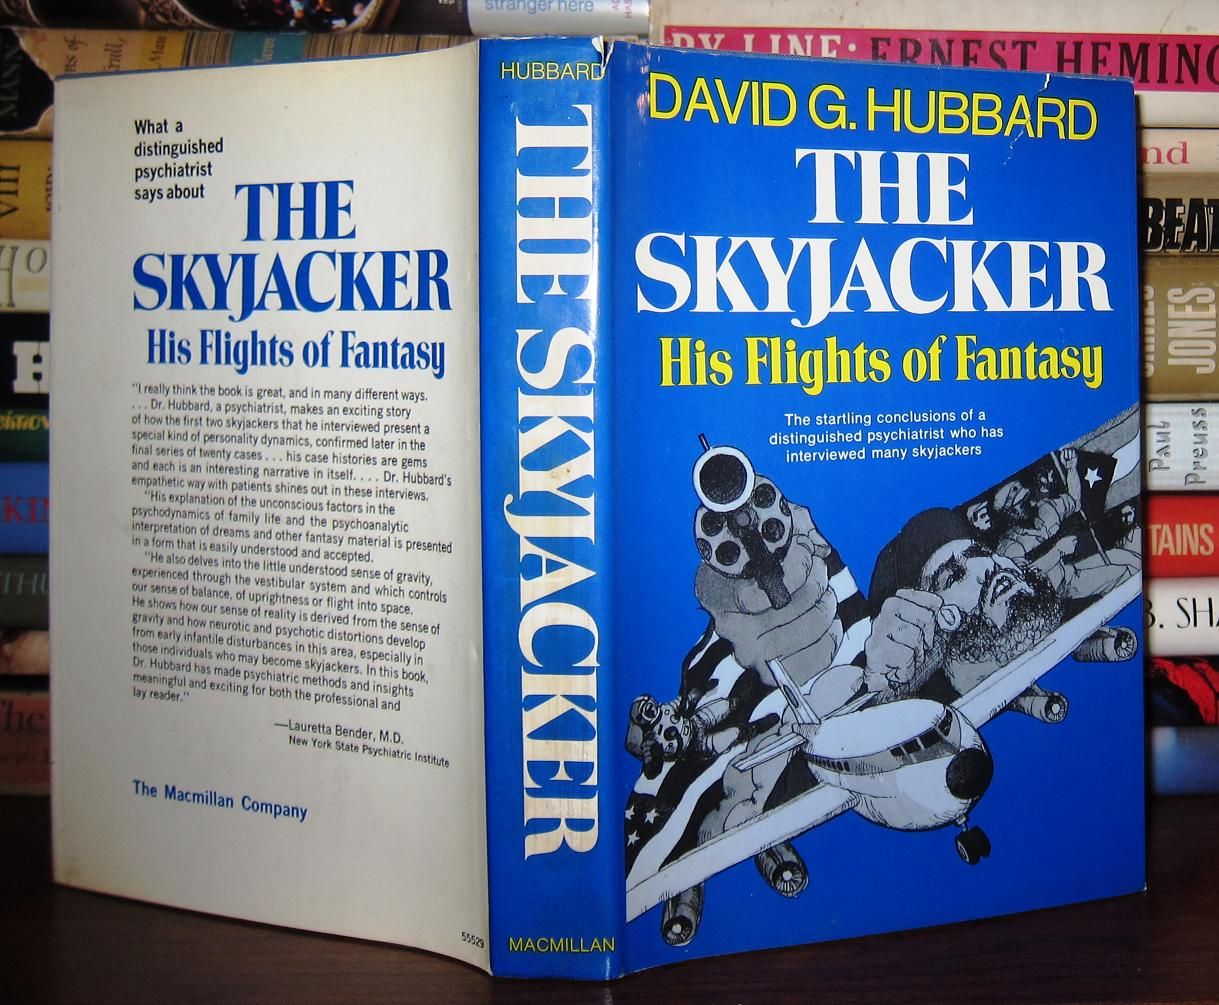 HUBBARD, DAVID G. - The Skyjacker His Flights of Fancy